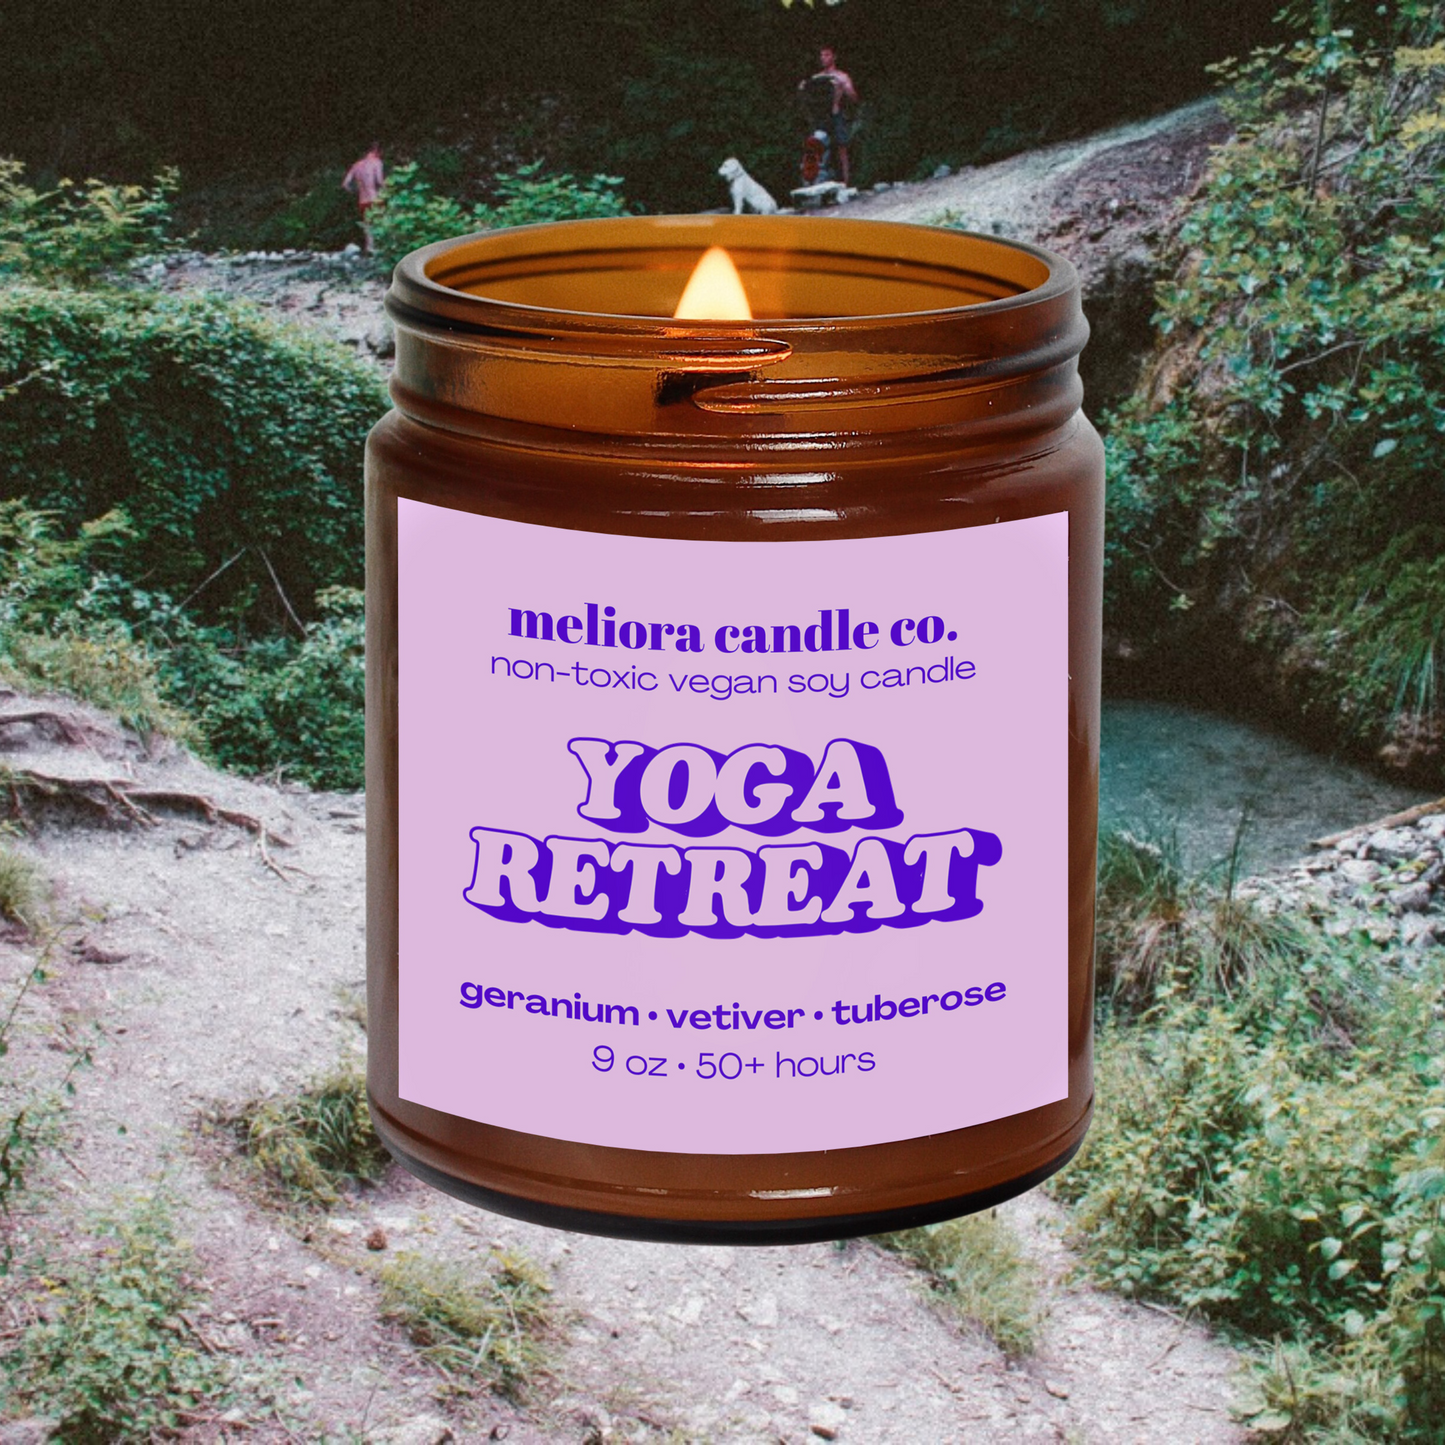 yoga retreat - geranium, vetiver, & tuberose